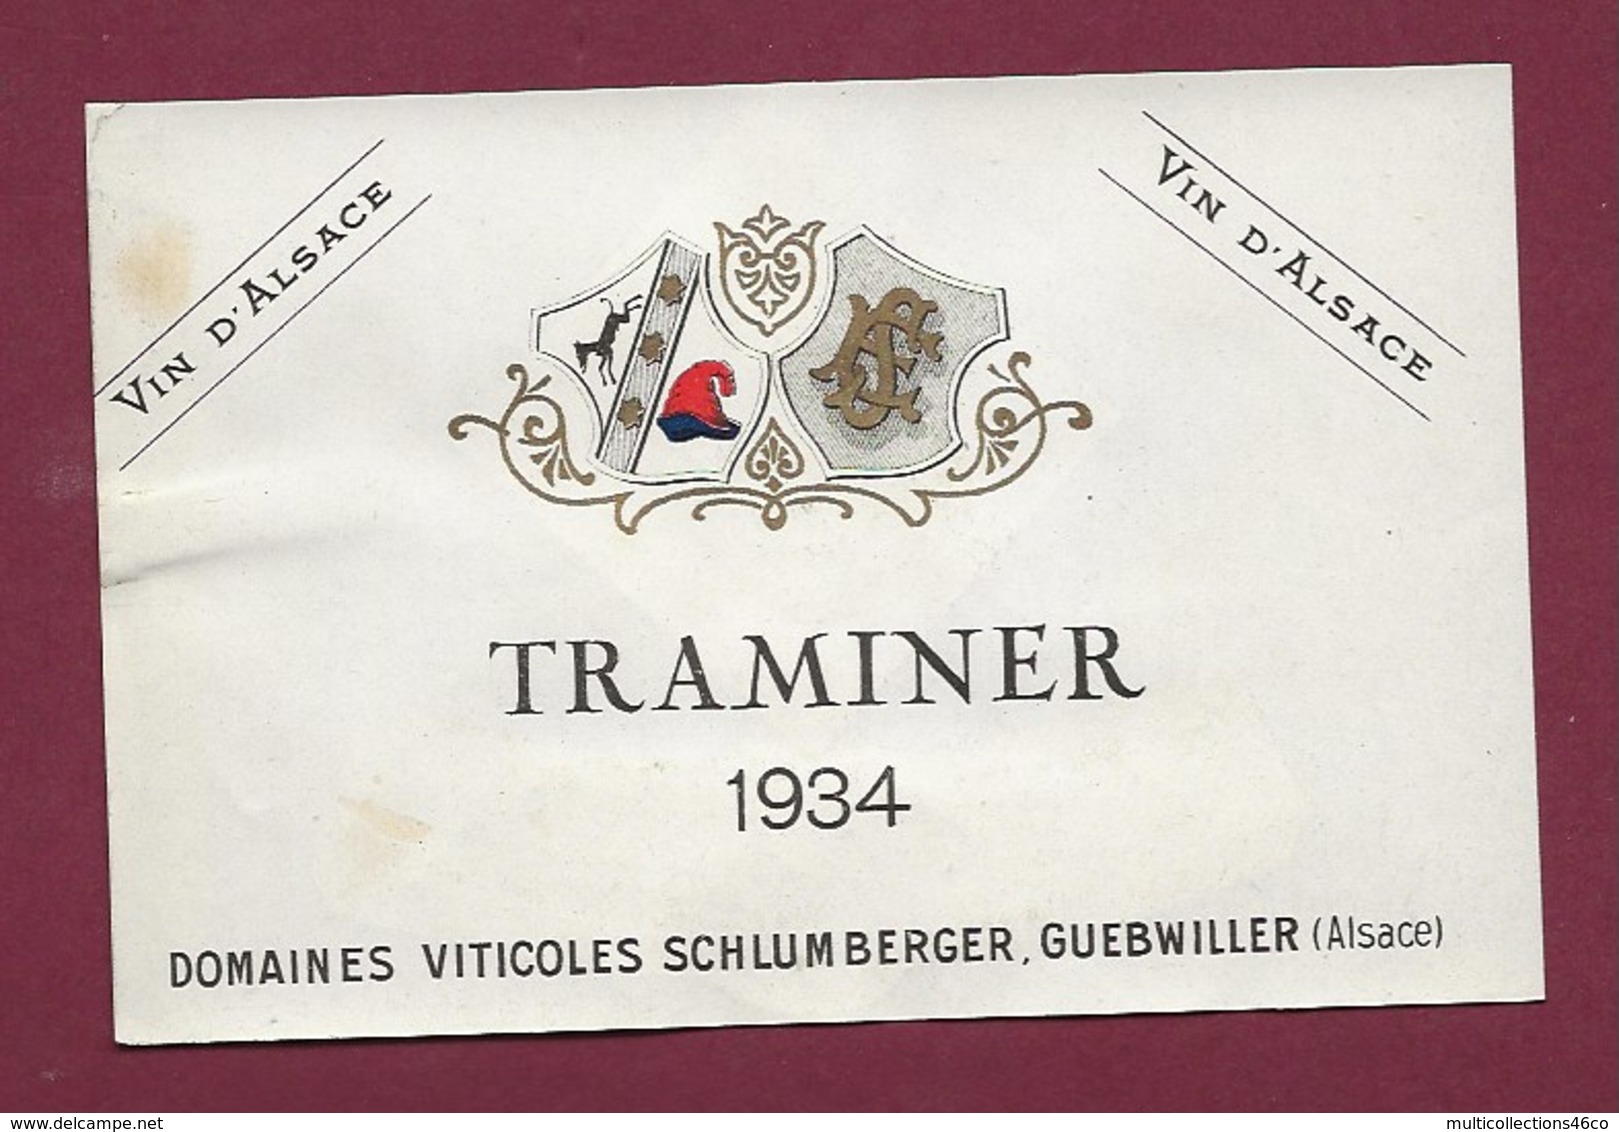 220919A - ETIQUETTE VIN BLANC - TRAMINER 1934 Vin D'Alsace Domaines Viticoles SCHLUMBERGER GUEBWILLER Ets UNGEMACH - Gewürztraminer